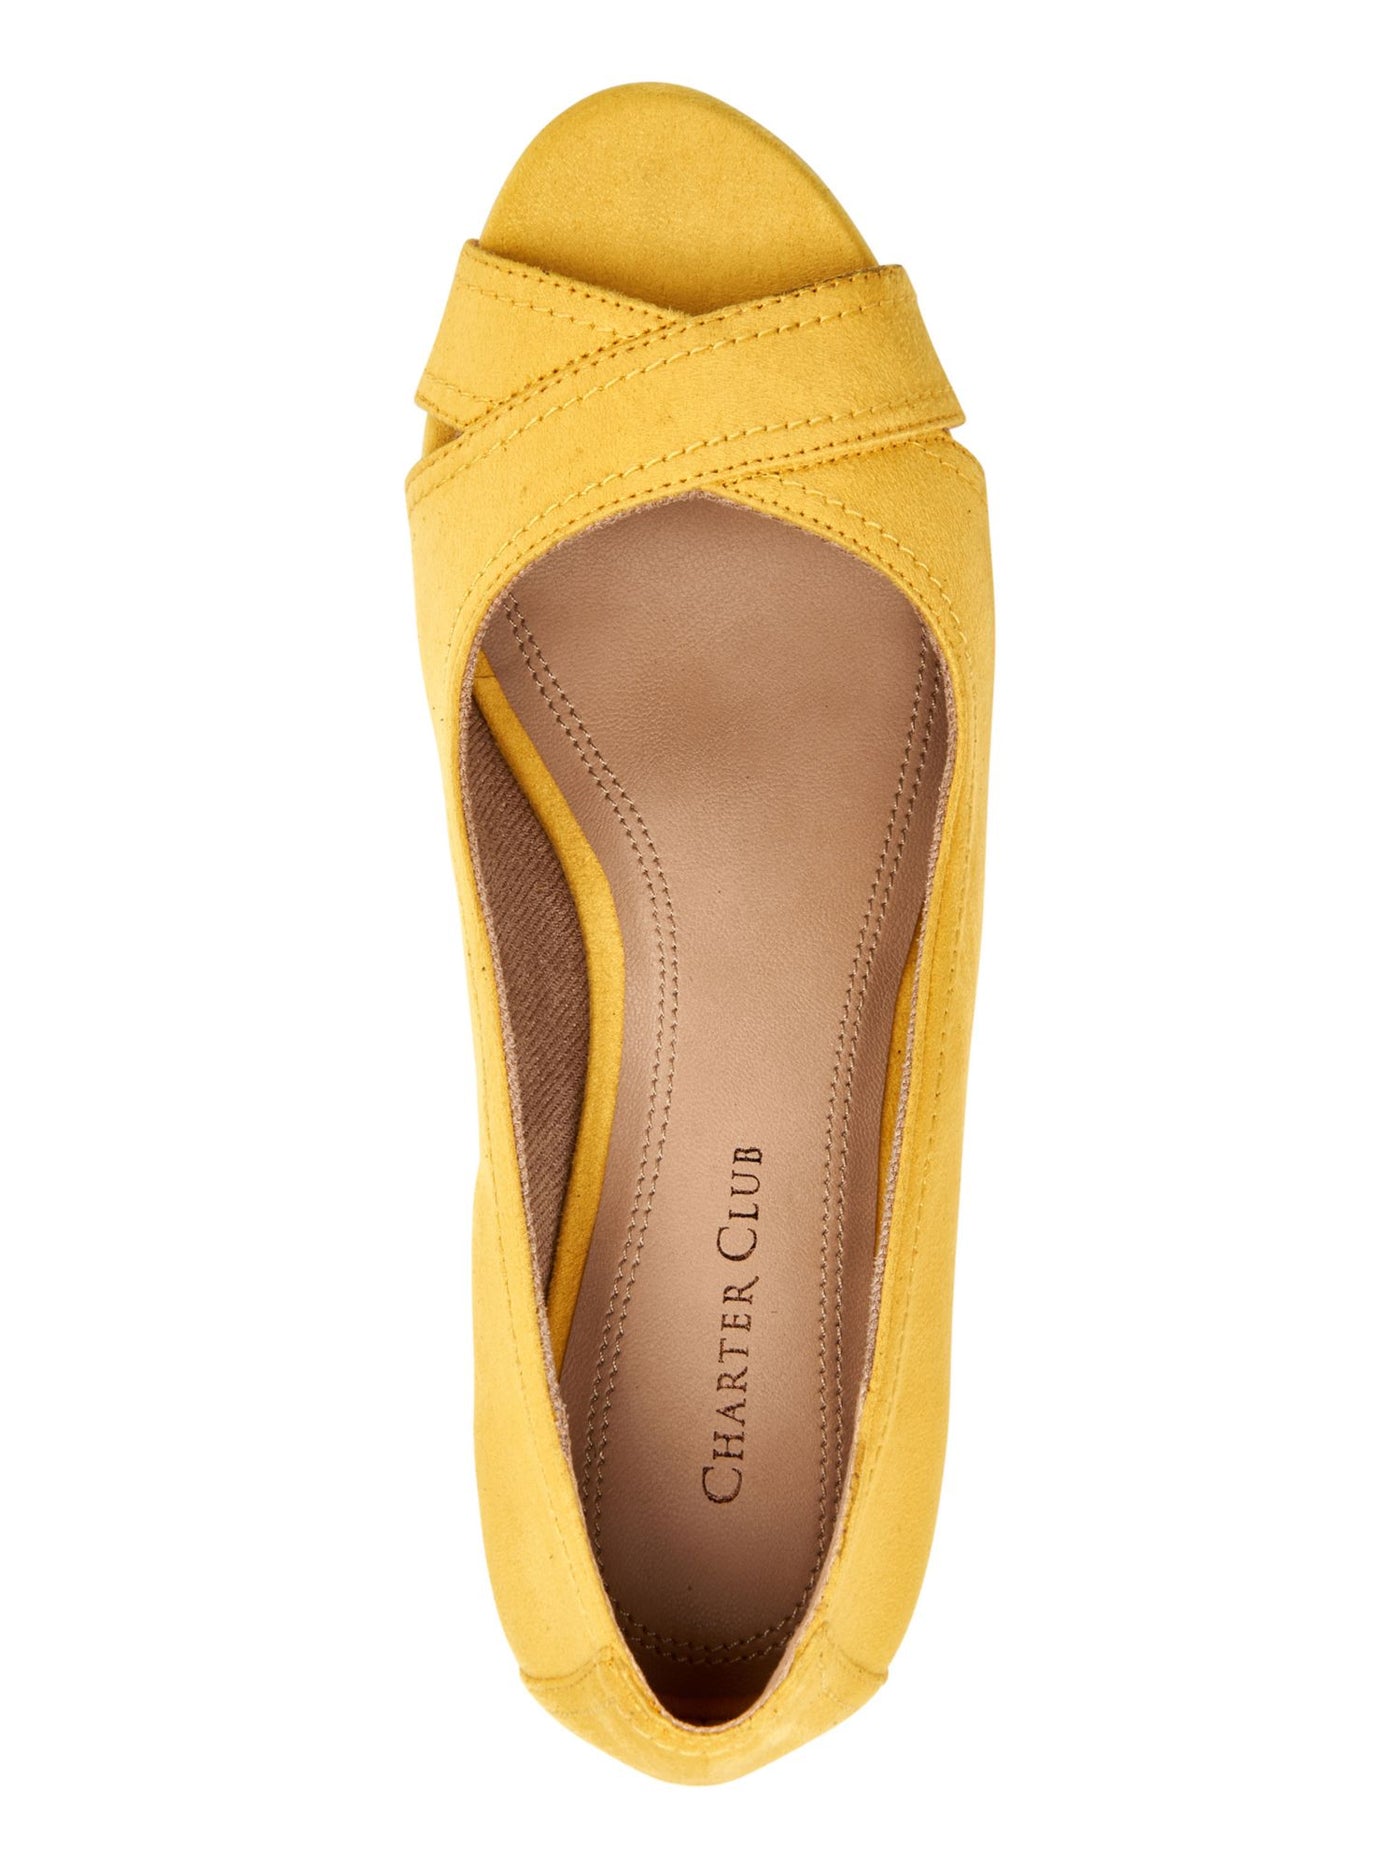 CHARTER CLUB Womens Yellow 1/2" Platform Crisscross Strap Comfort Toniie Round Toe Wedge Slip On Sandals Shoes 6 M